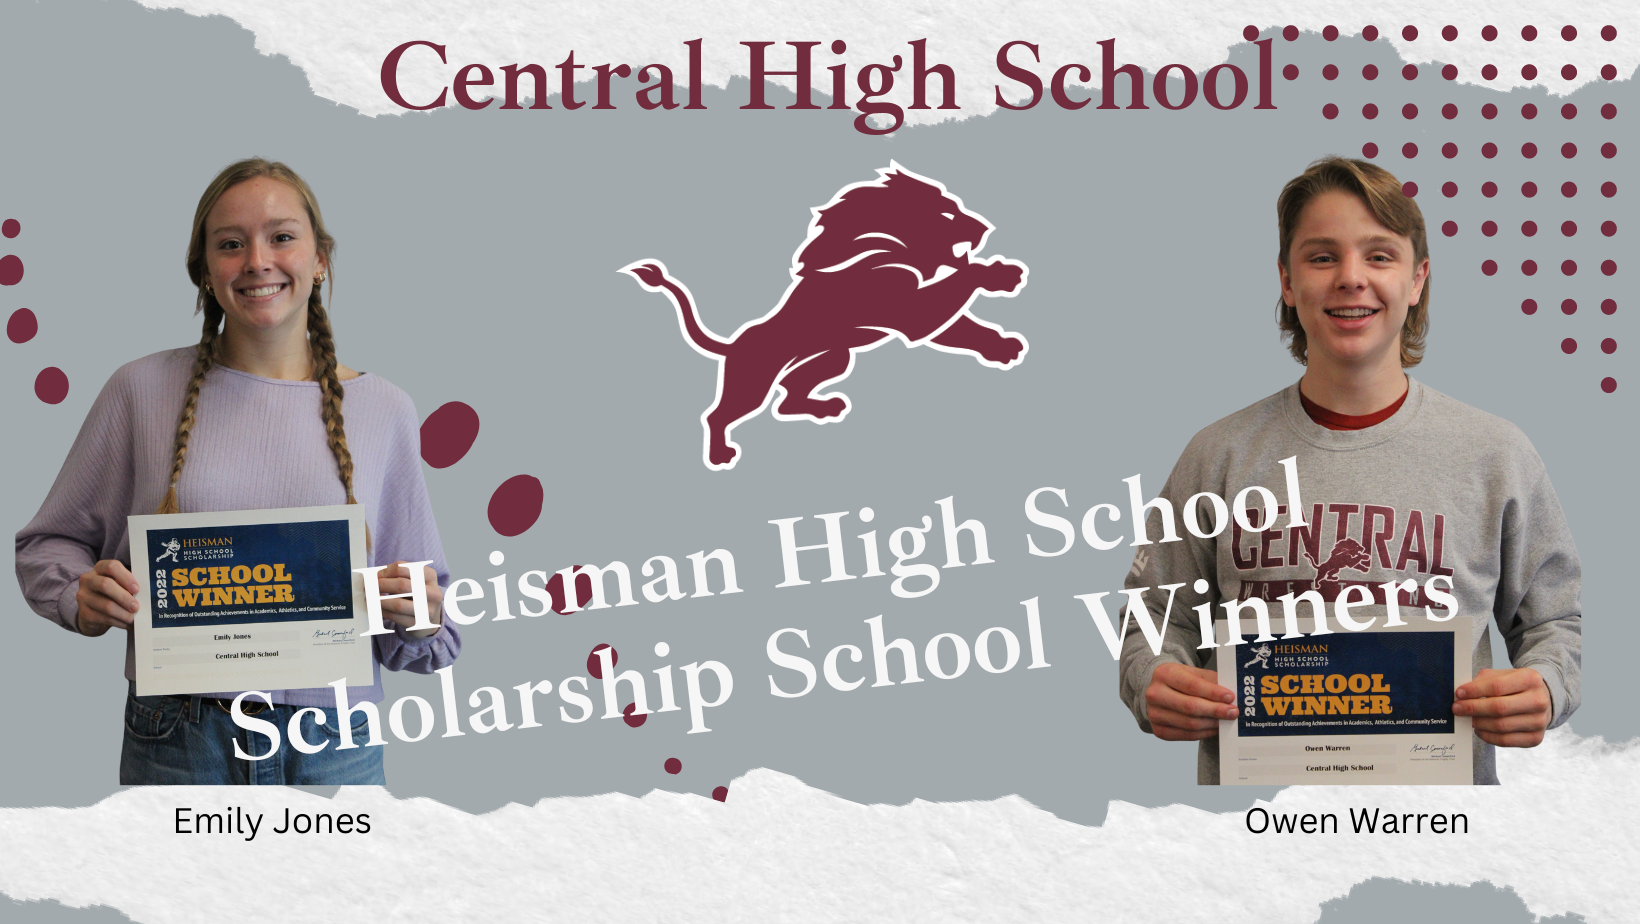 Central High School Heisman Scholarship School Winners